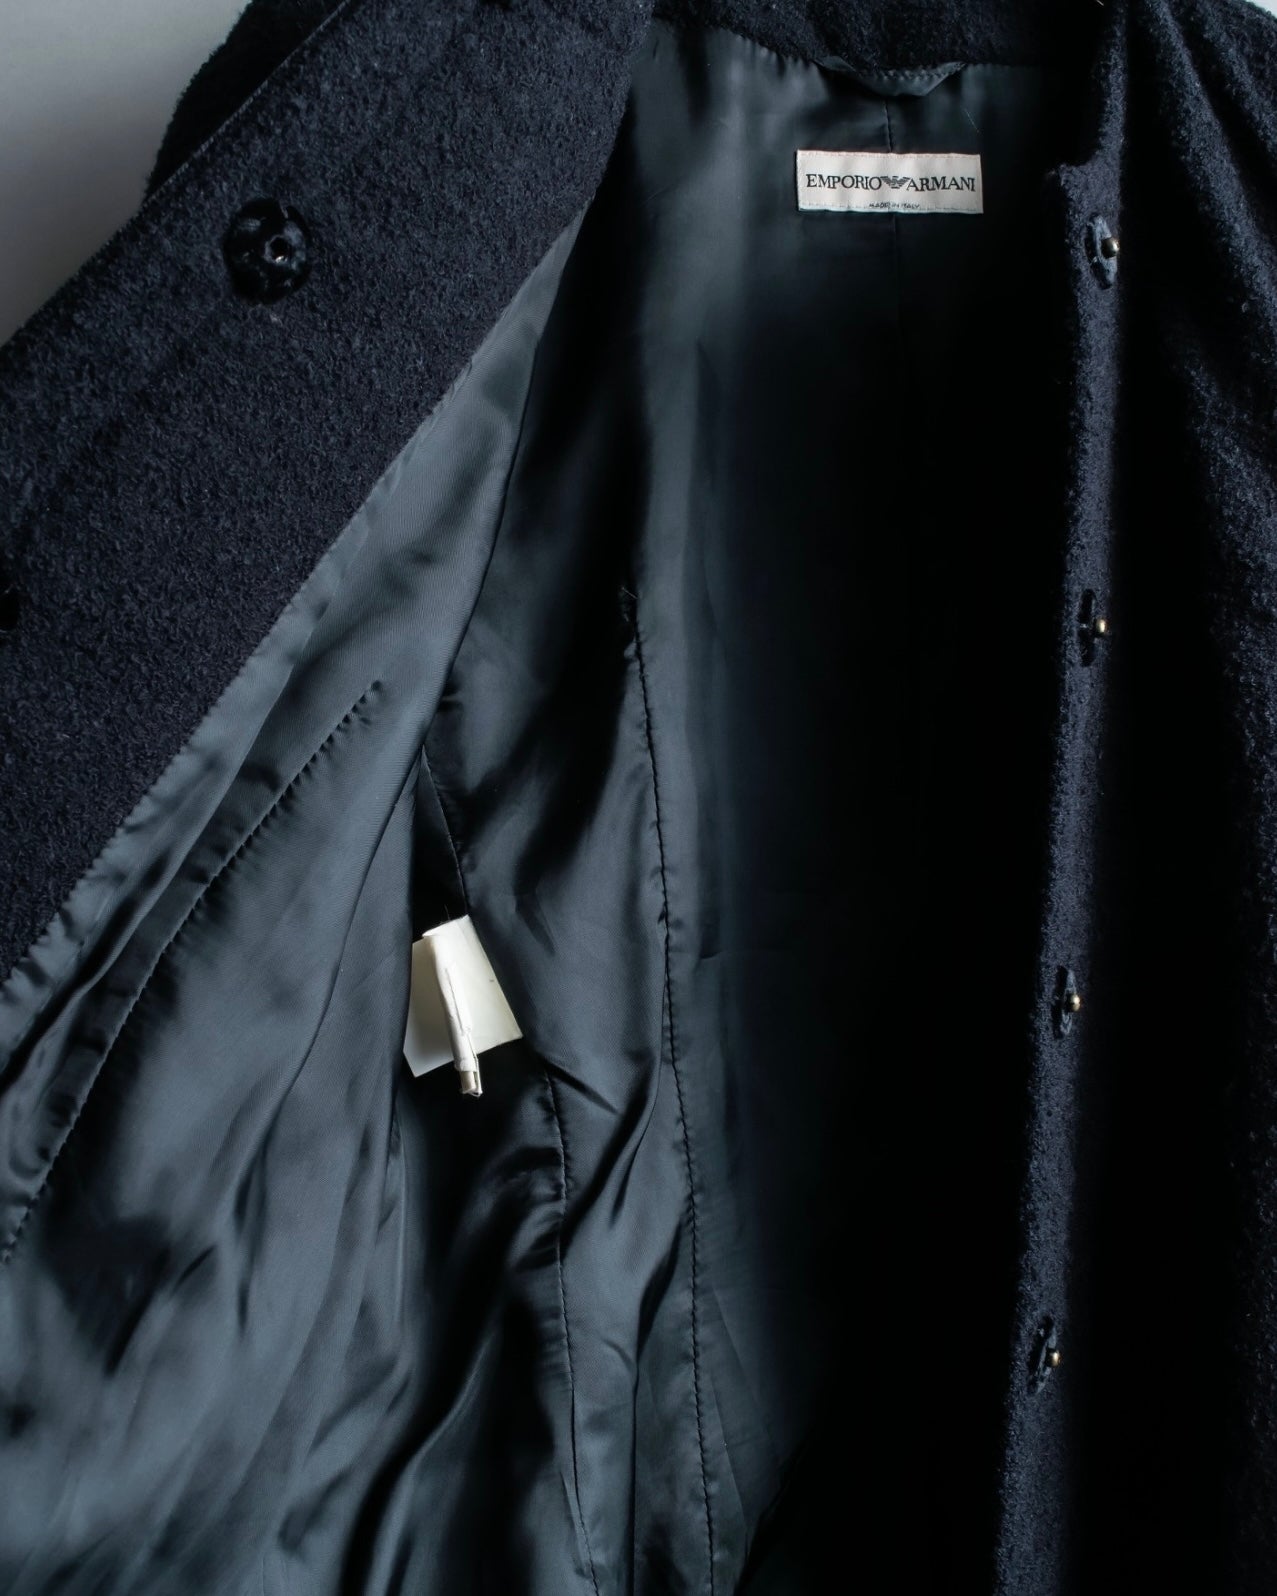 "EMPORIO ARMANI" Three-line short fly front jacket